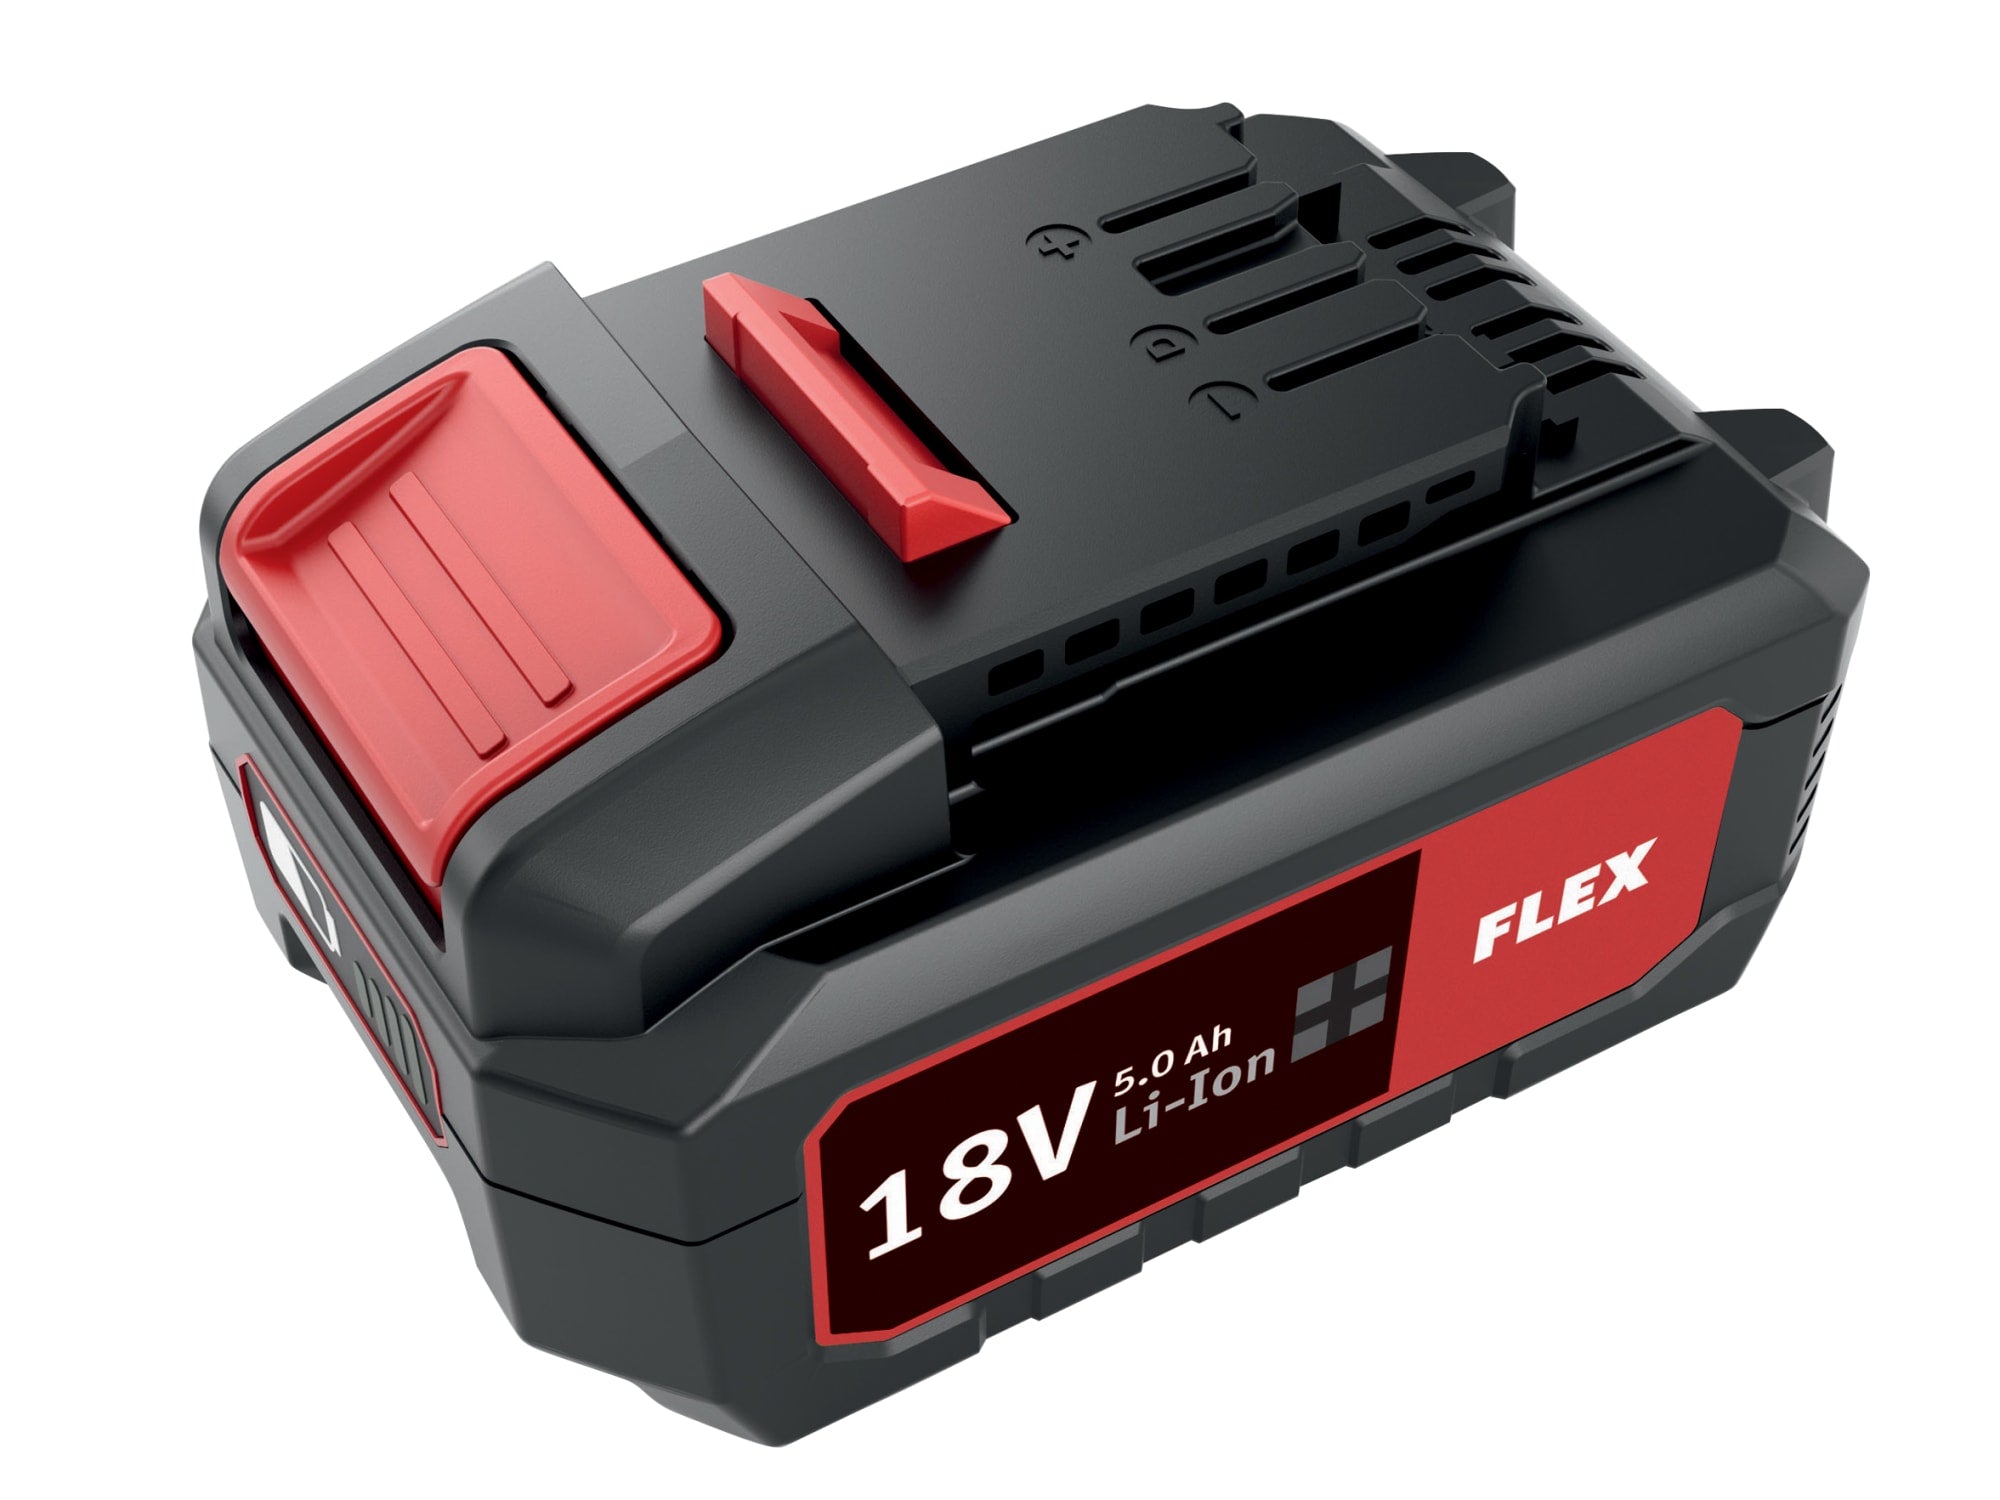 Flex AP 18V 5.0Ah Li-ion Battery Pack